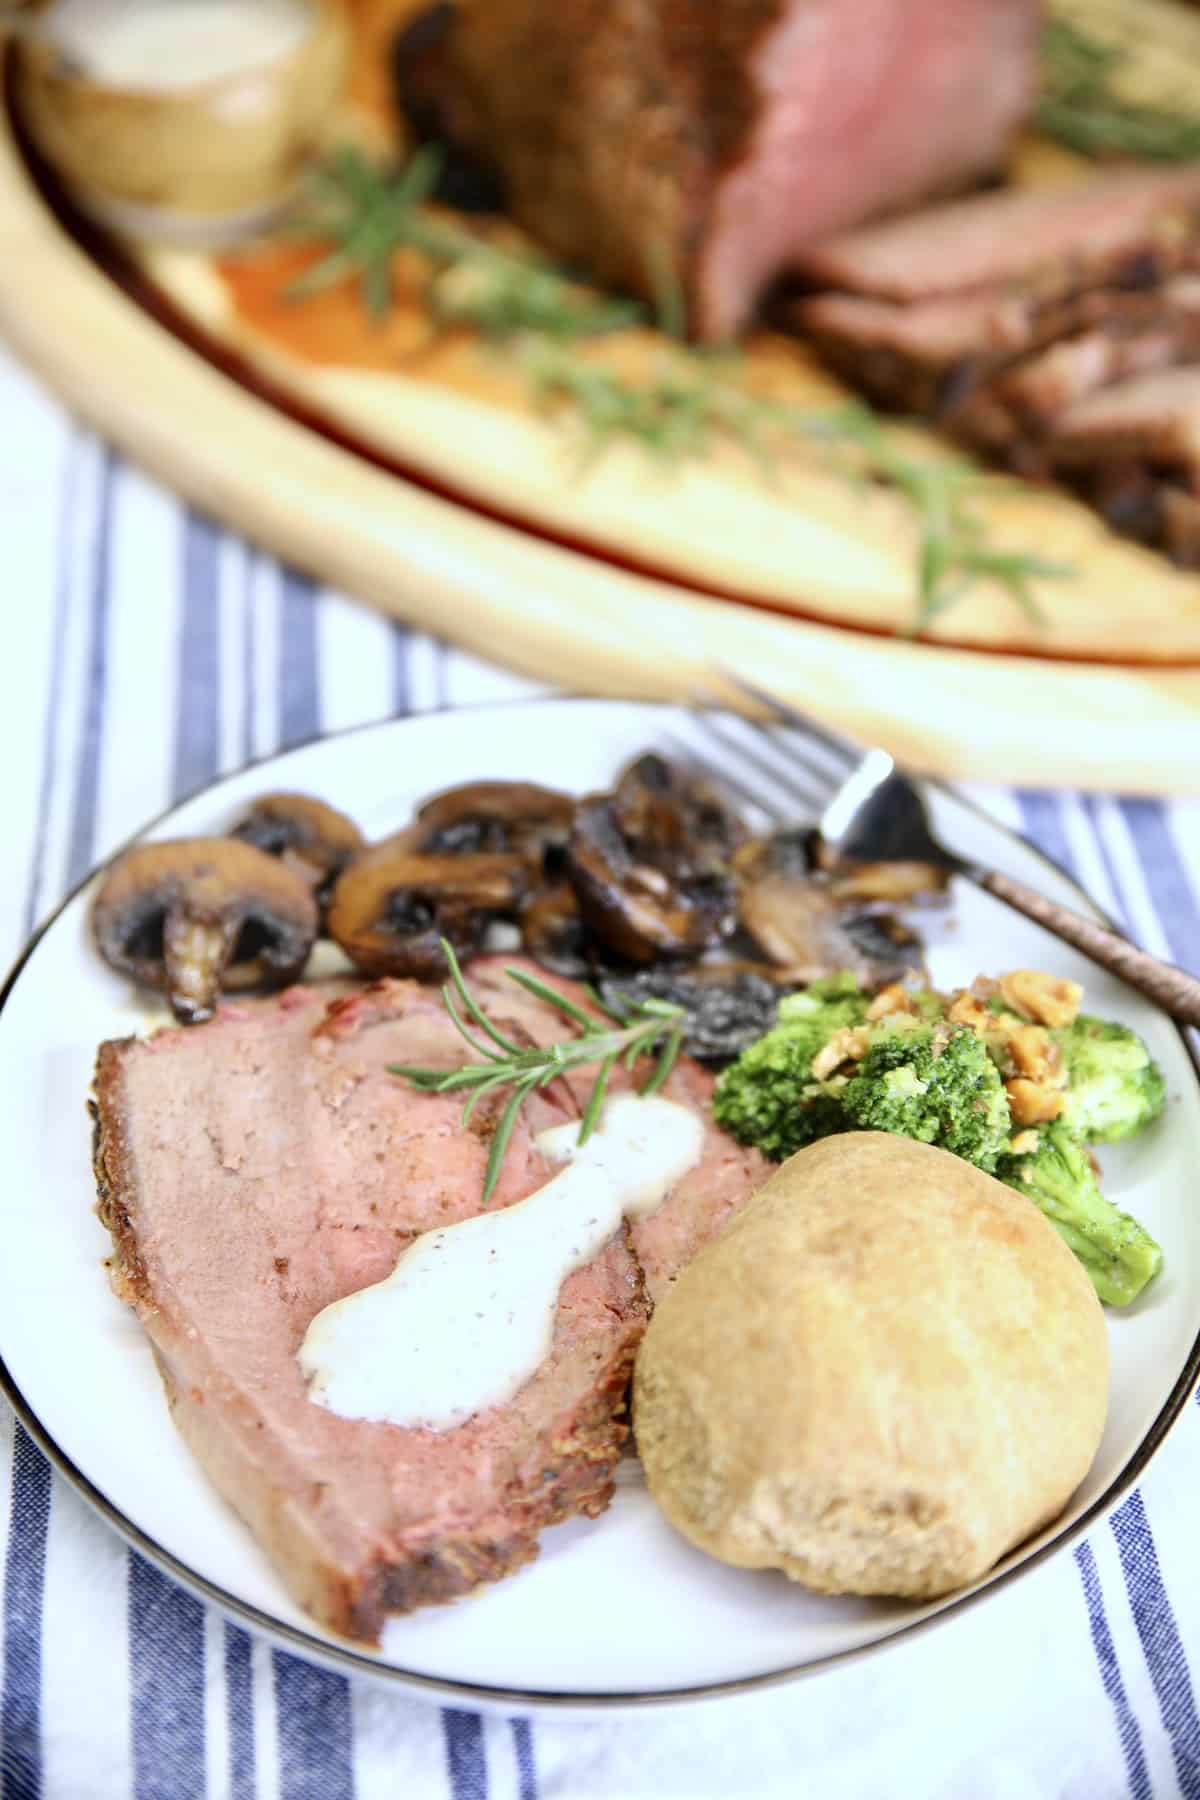 Plate with slice of roast beef with horseradish sauce, mushrooms, broccoli & dinner roll.